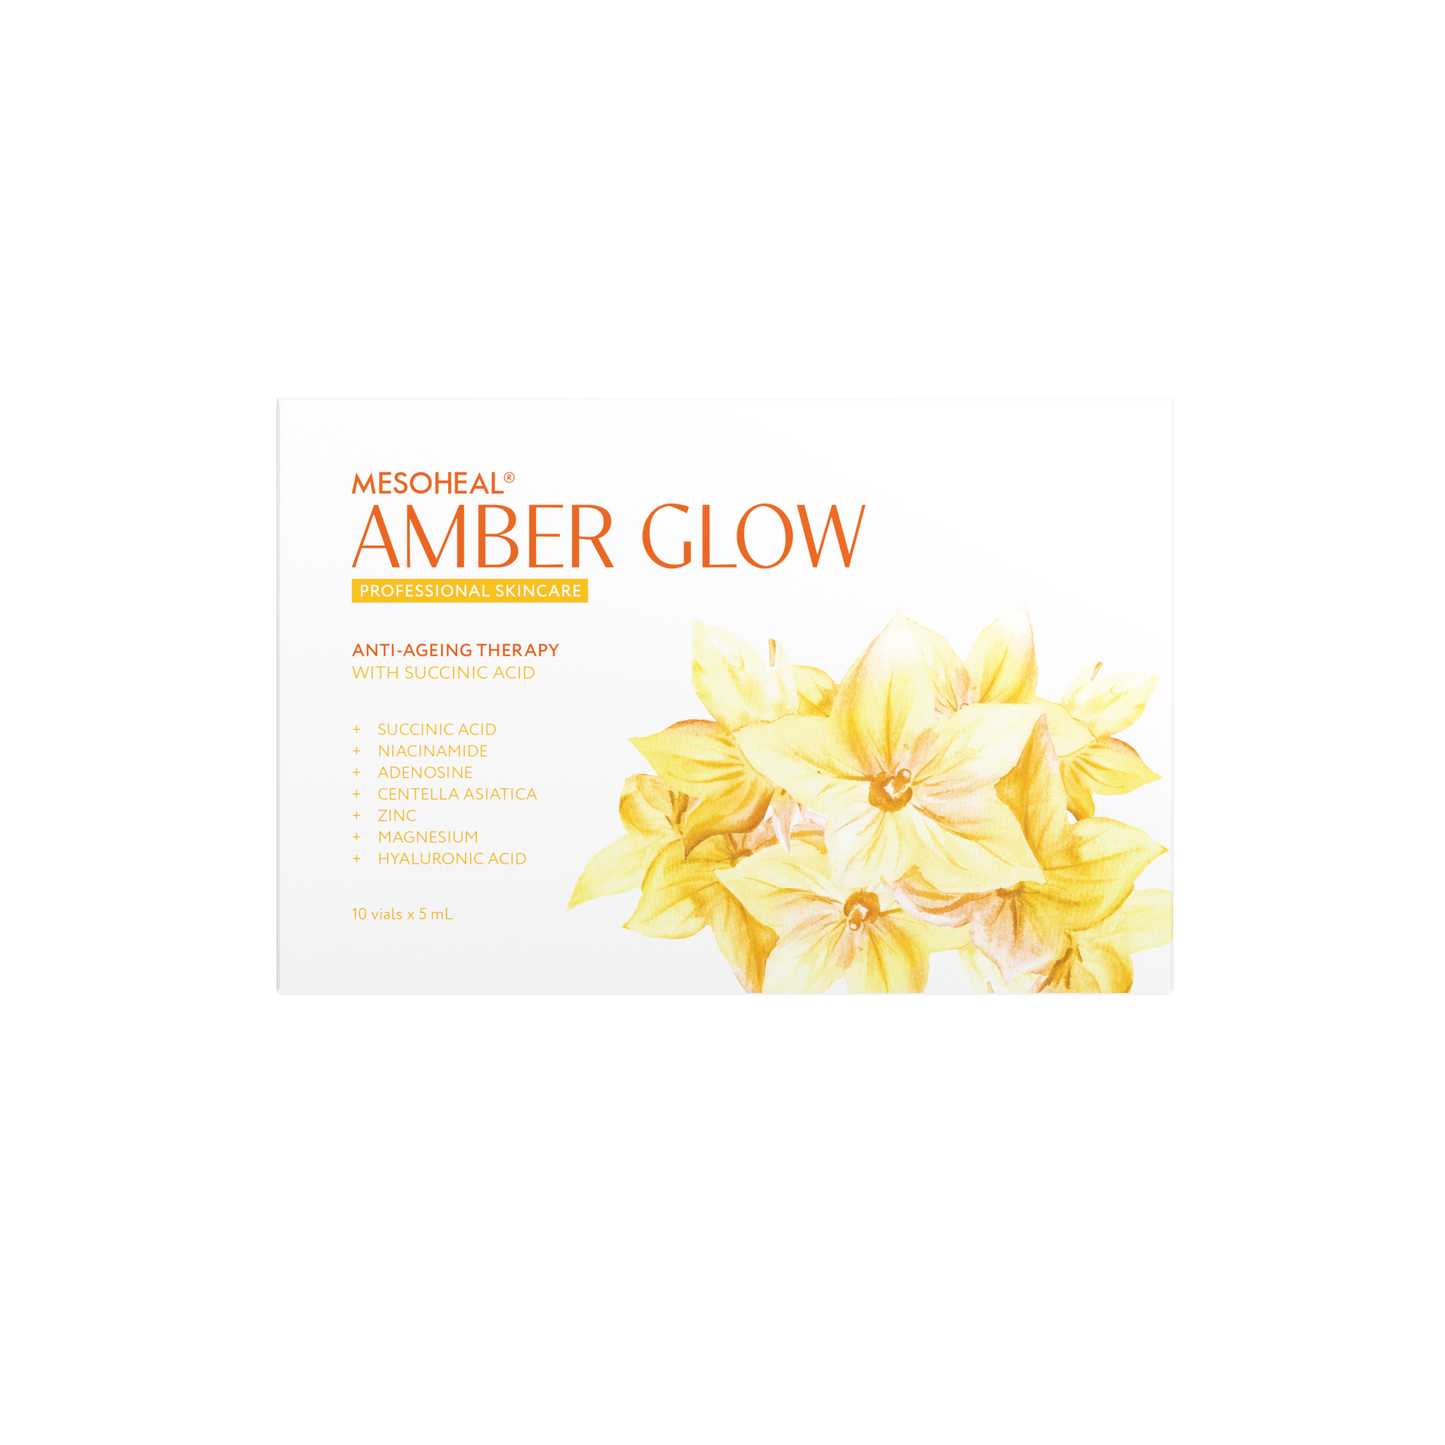 Mesoheal Amber Glow